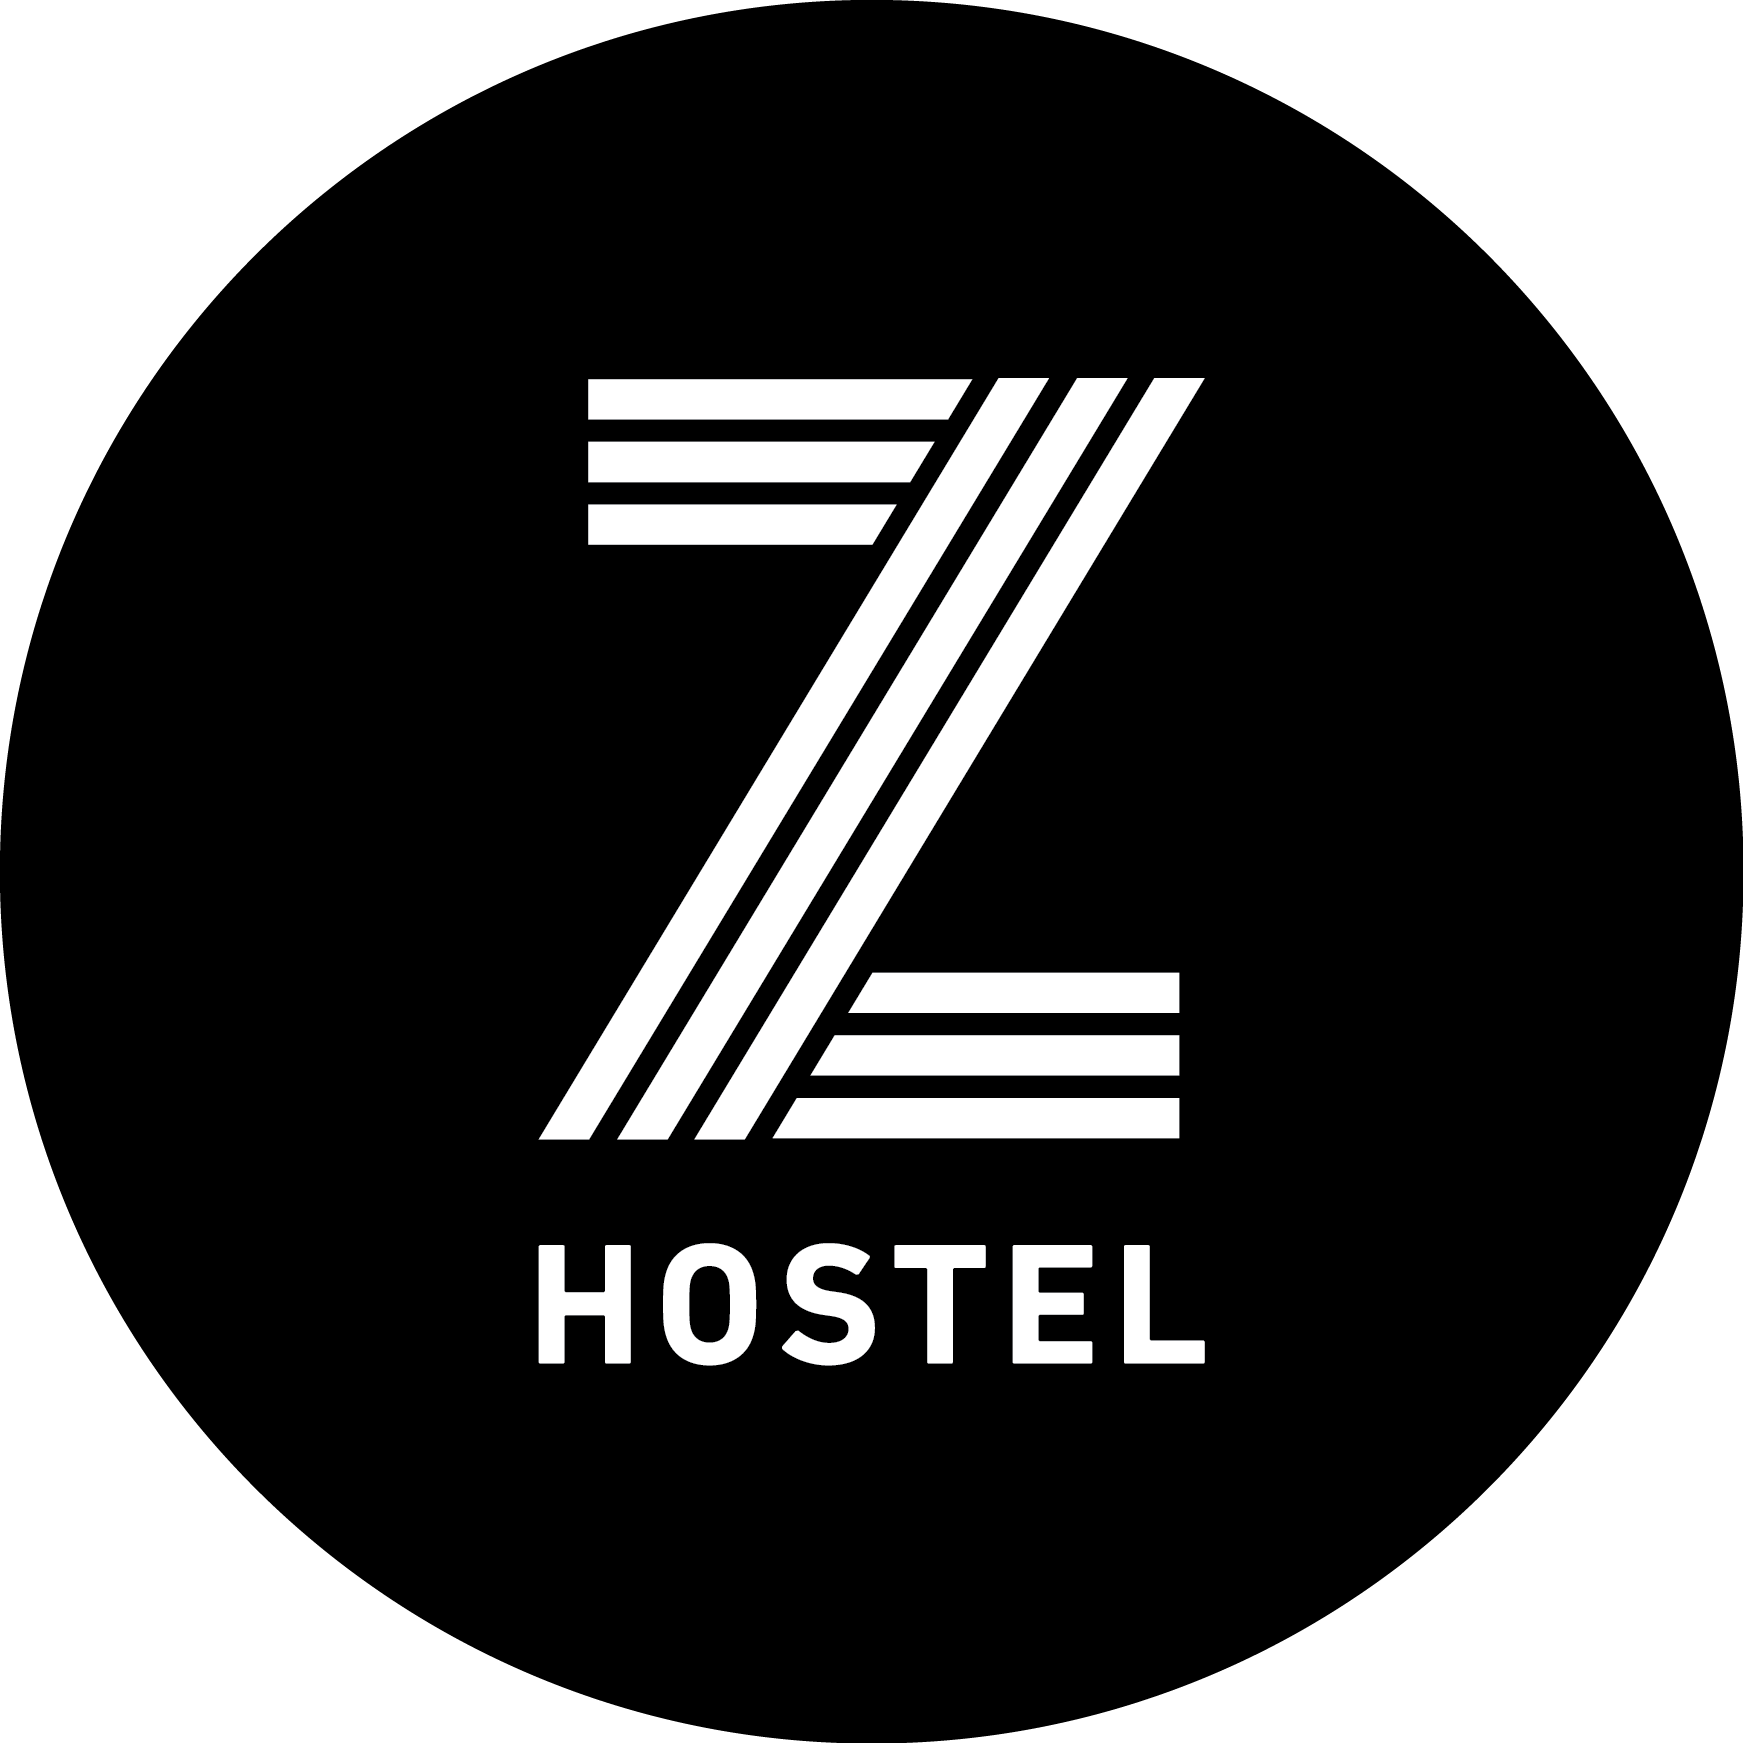 Zhostel logo.png